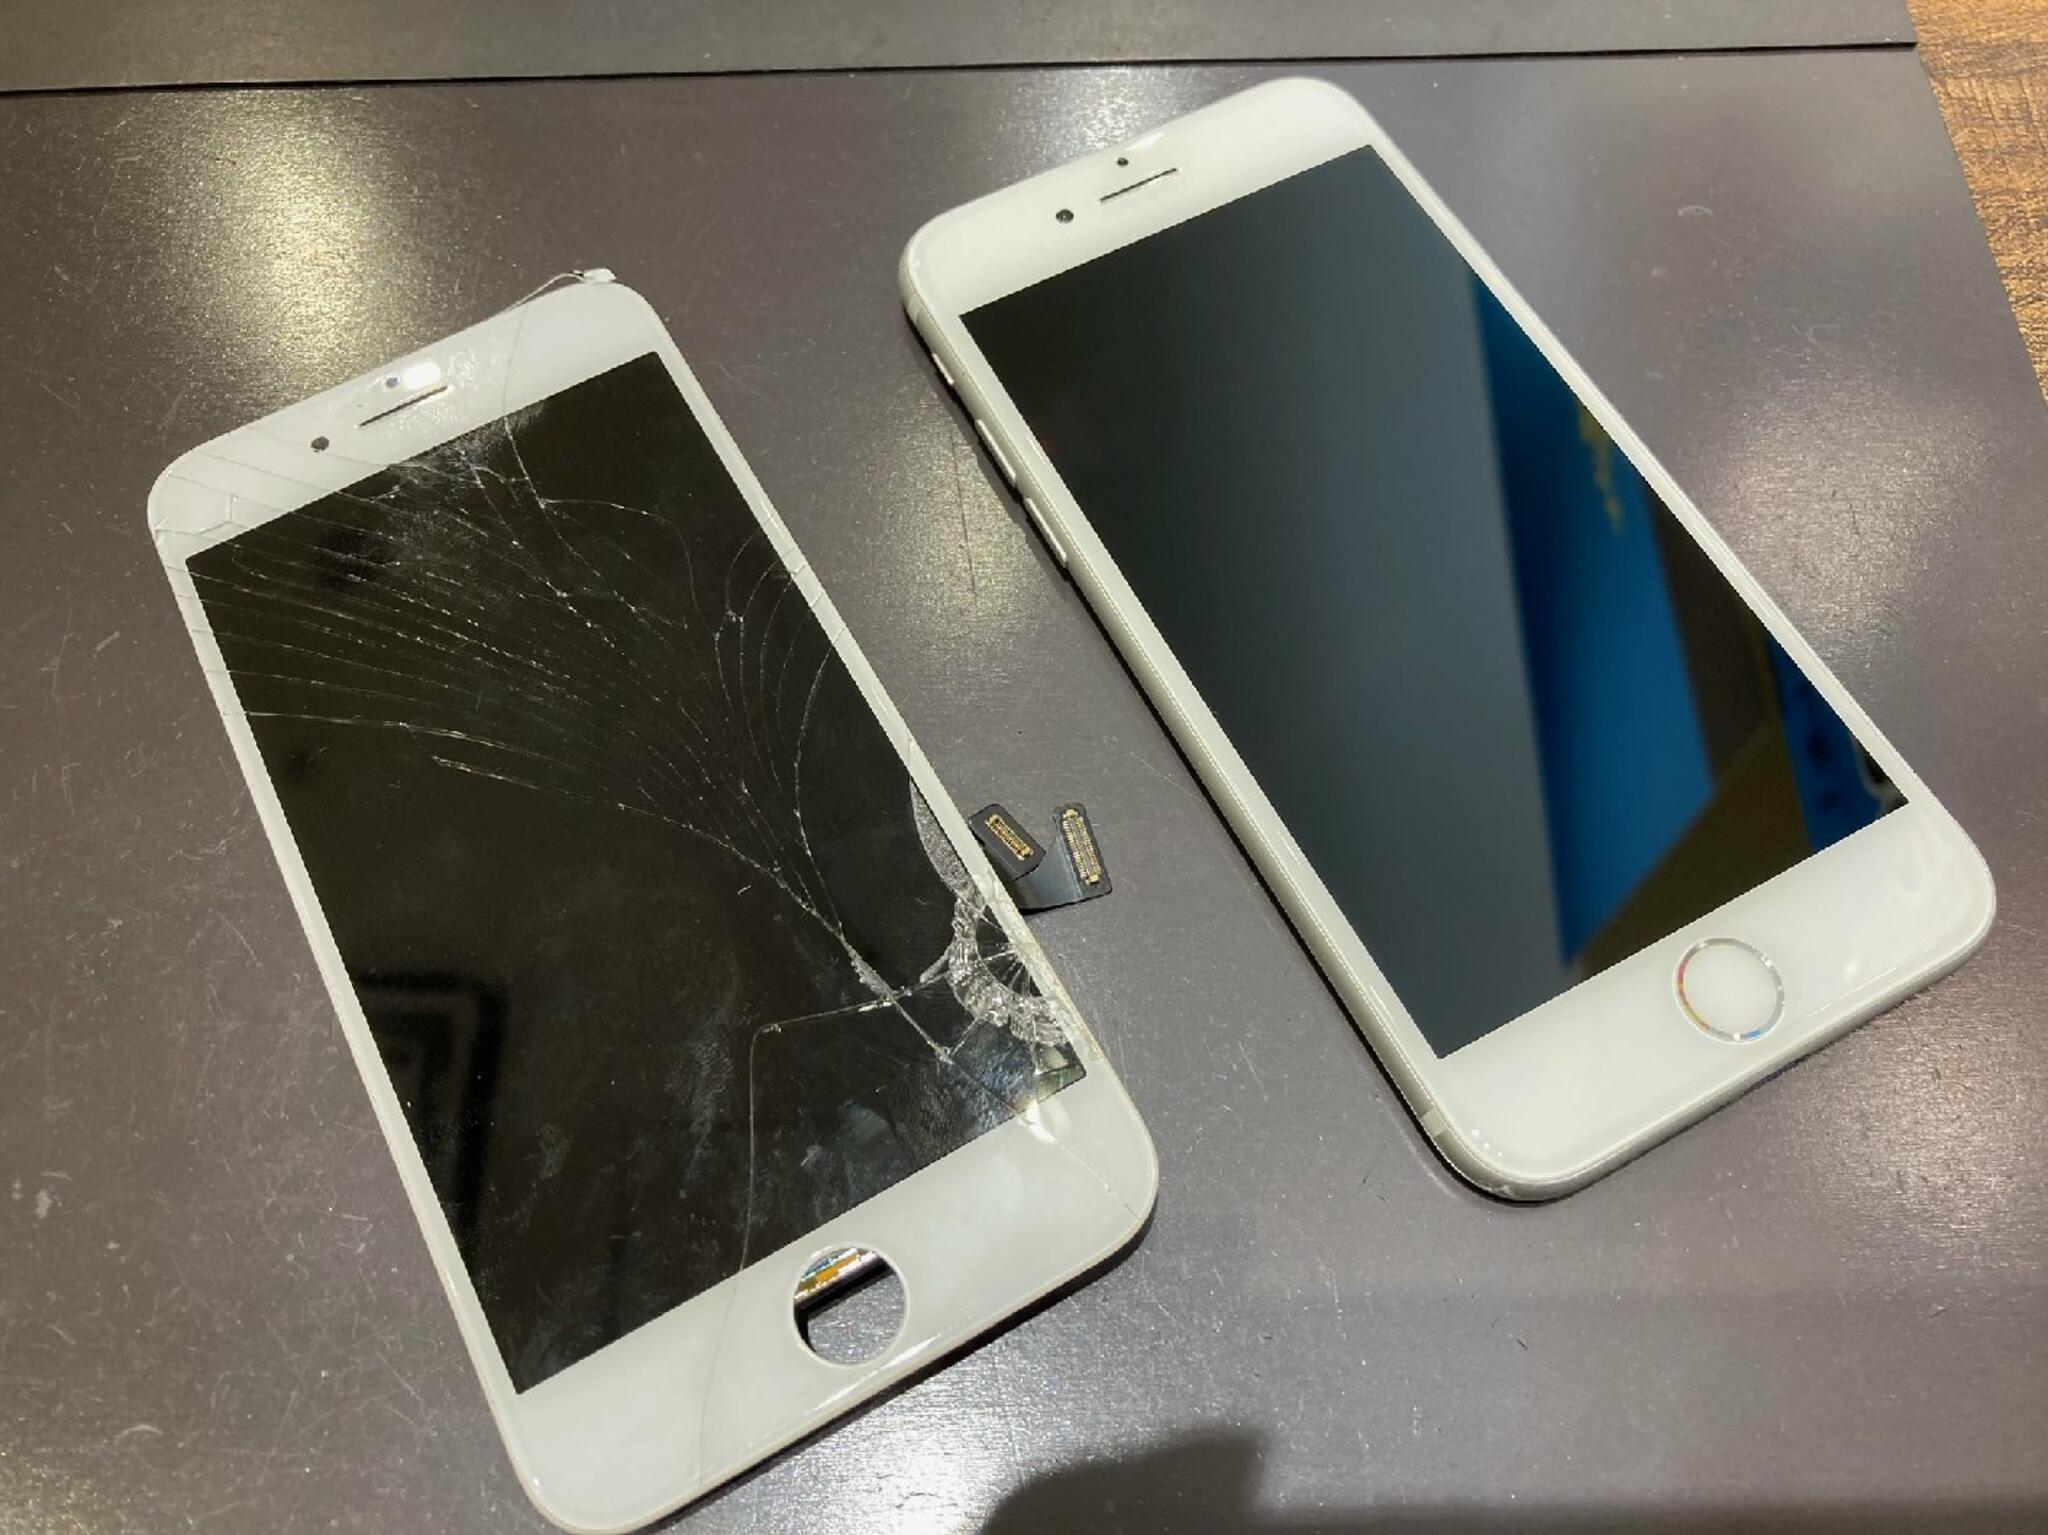 iPhone・iPad・Switch修理店 スマートクール イオンモール広島祇園店からのお知らせ( 画面修理 と一緒に耐水シールはいかがですか？)に関する写真